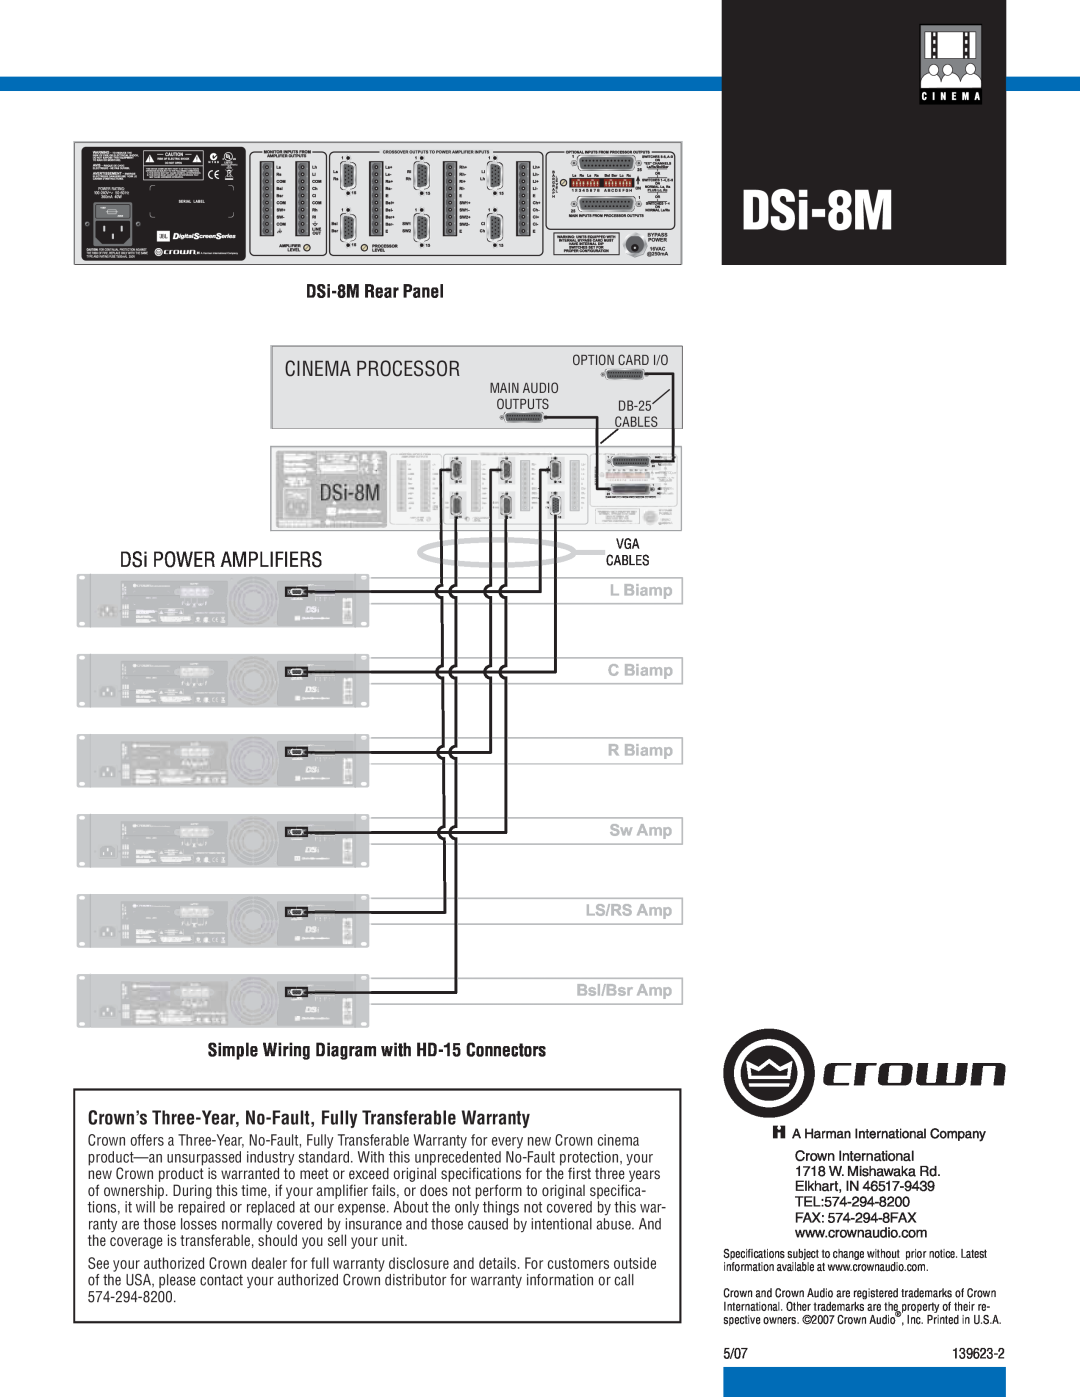 Crown Audio DSi-8MRear Panel, Simple Wiring Diagram with HD-15Connectors, Cinema Processor, DSi POWER AMPLIFIERS 